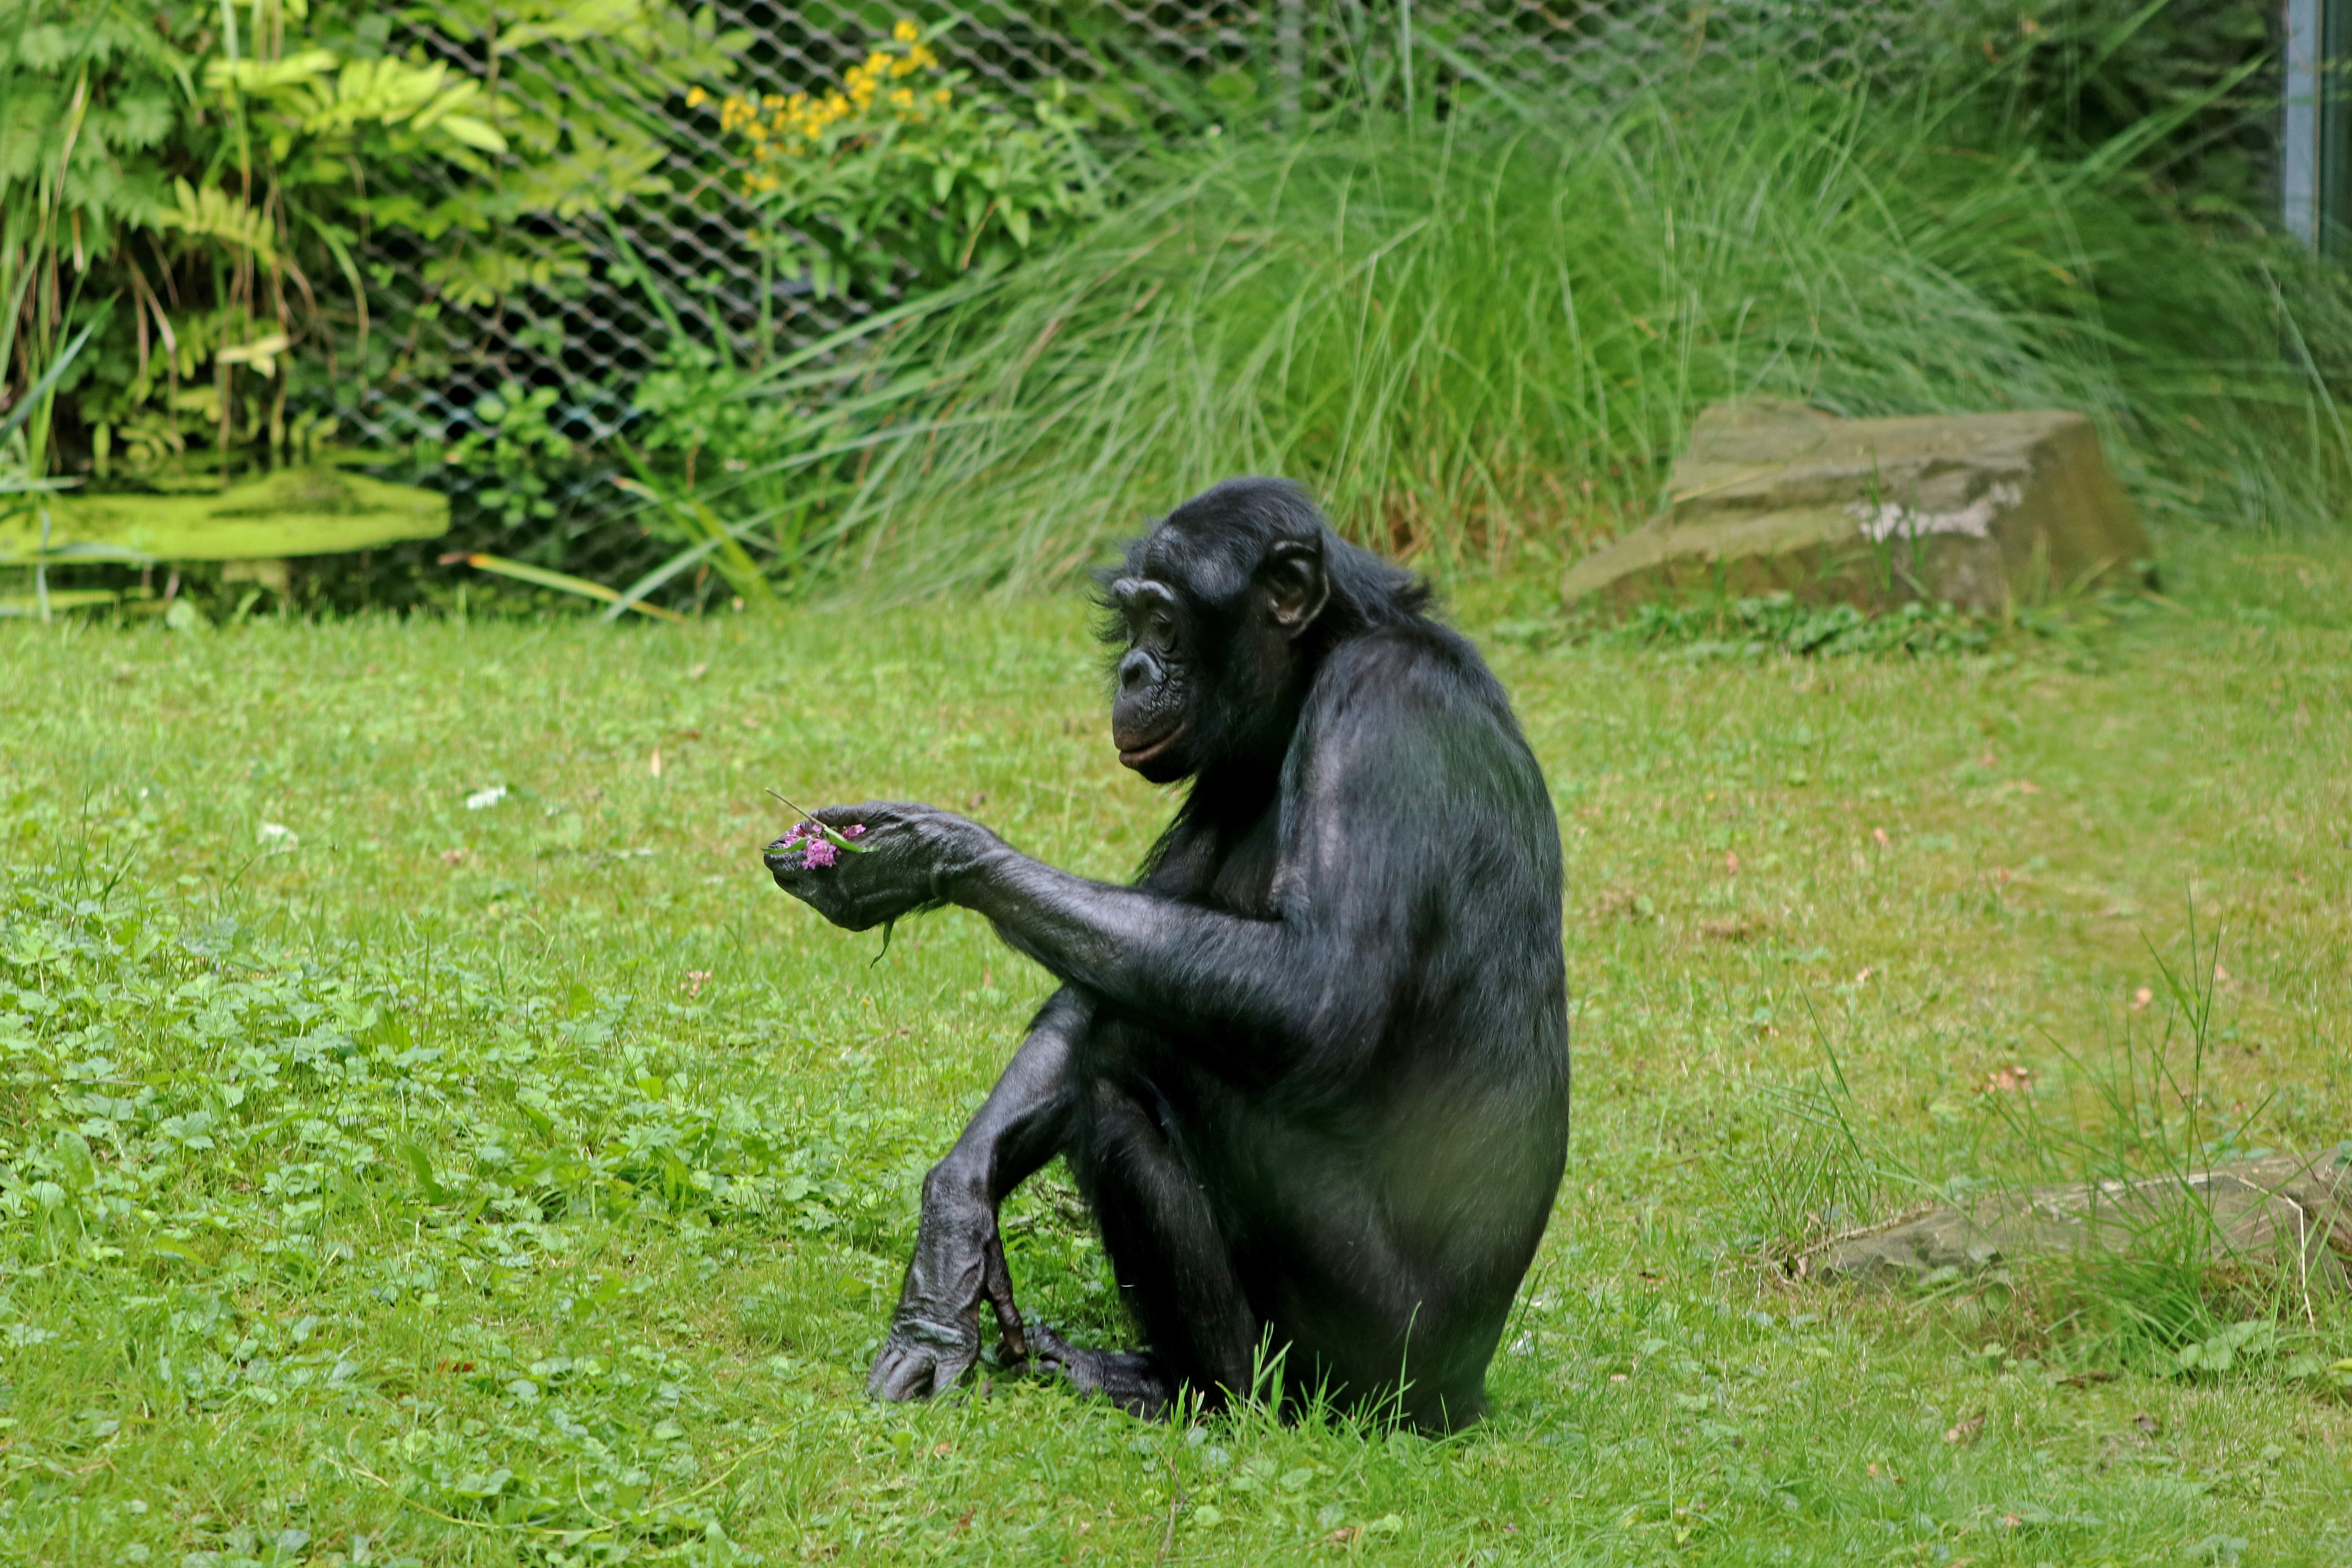 Bonobos, Ape, Primates, Animal, wildlife photography, zoo, chimpanzee